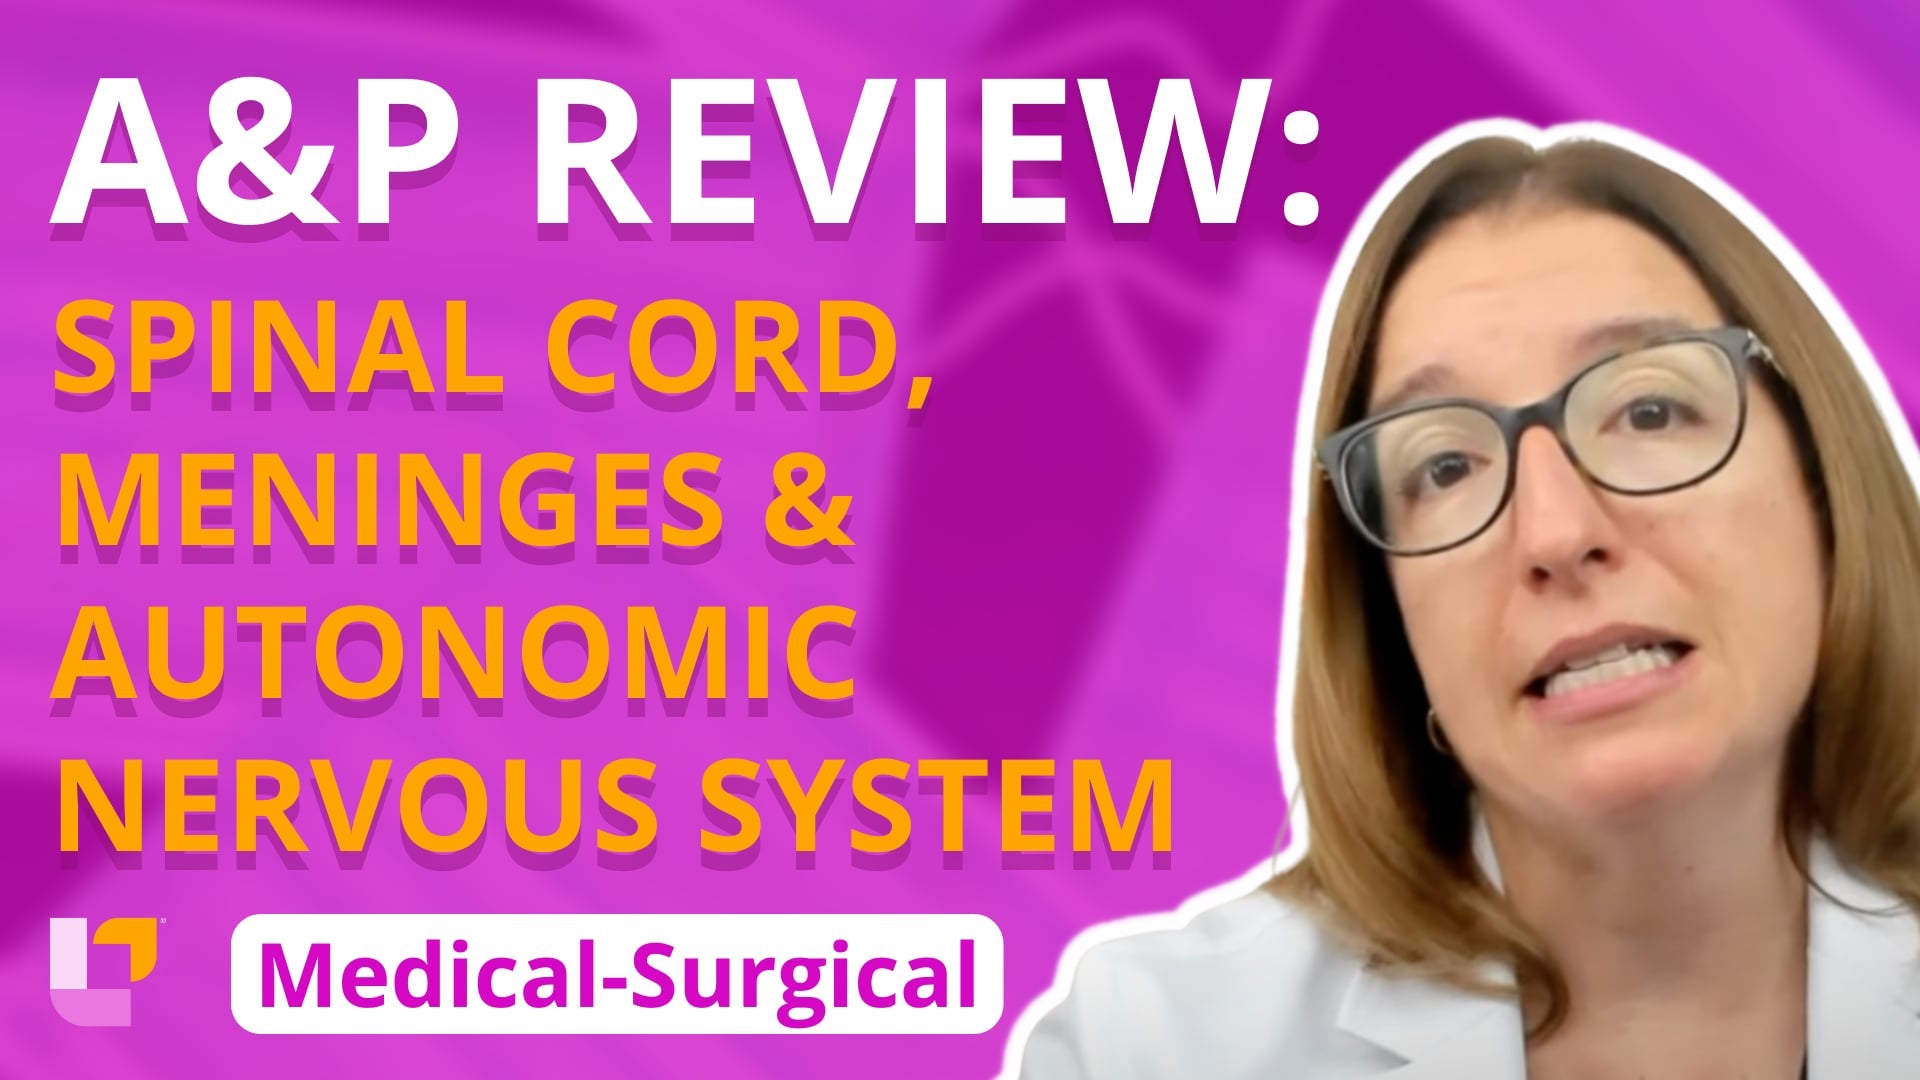 Med-Surg - Nervous System, part 3: A&P Review - Spinal Cord, Meninges, ANS - LevelUpRN